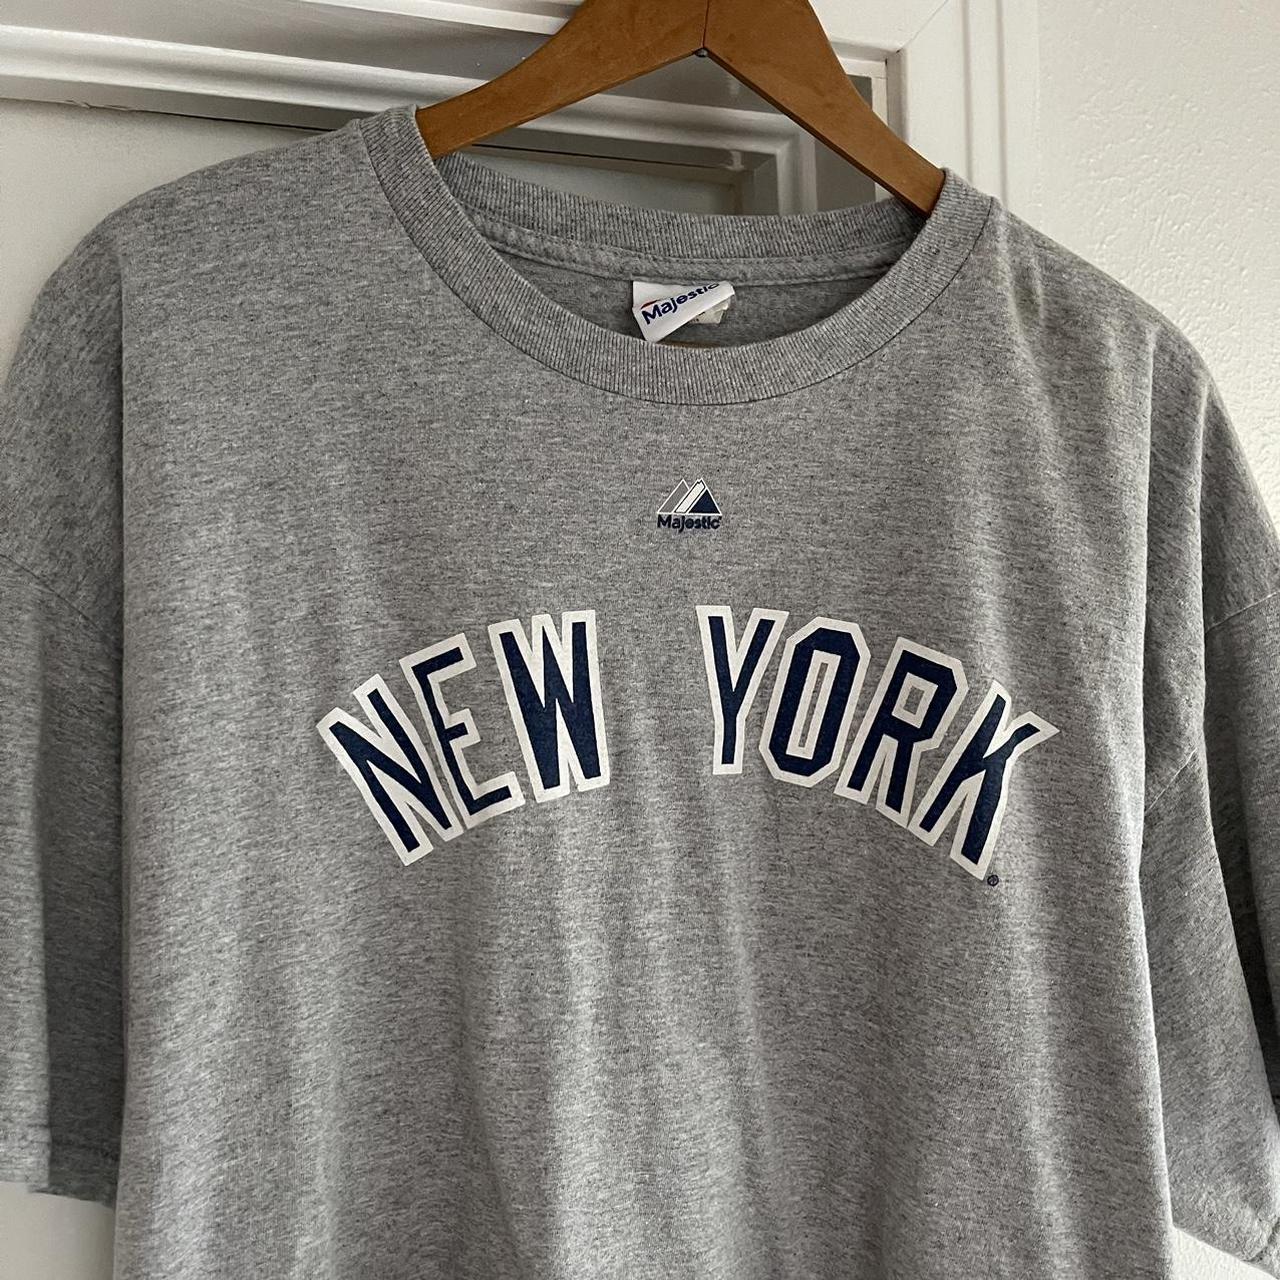 Vintage 00s Navy MLB New York Yankees Baseball Jerseys - Large